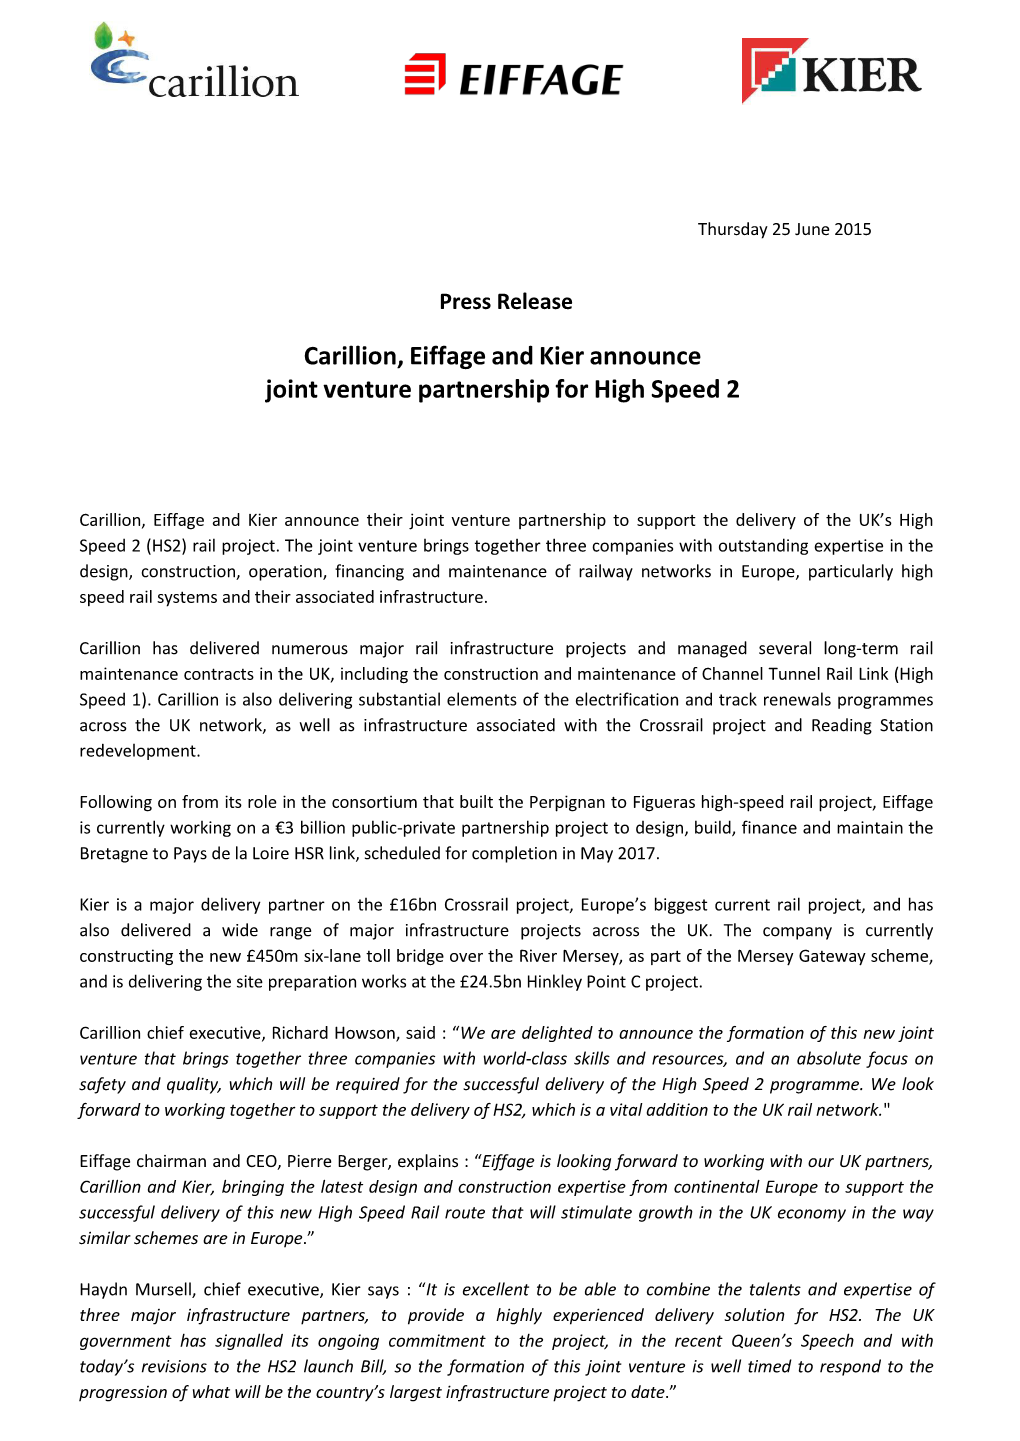 Carillion, Eiffage and Kier Announce Joint Venture Partnership for High Speed 2